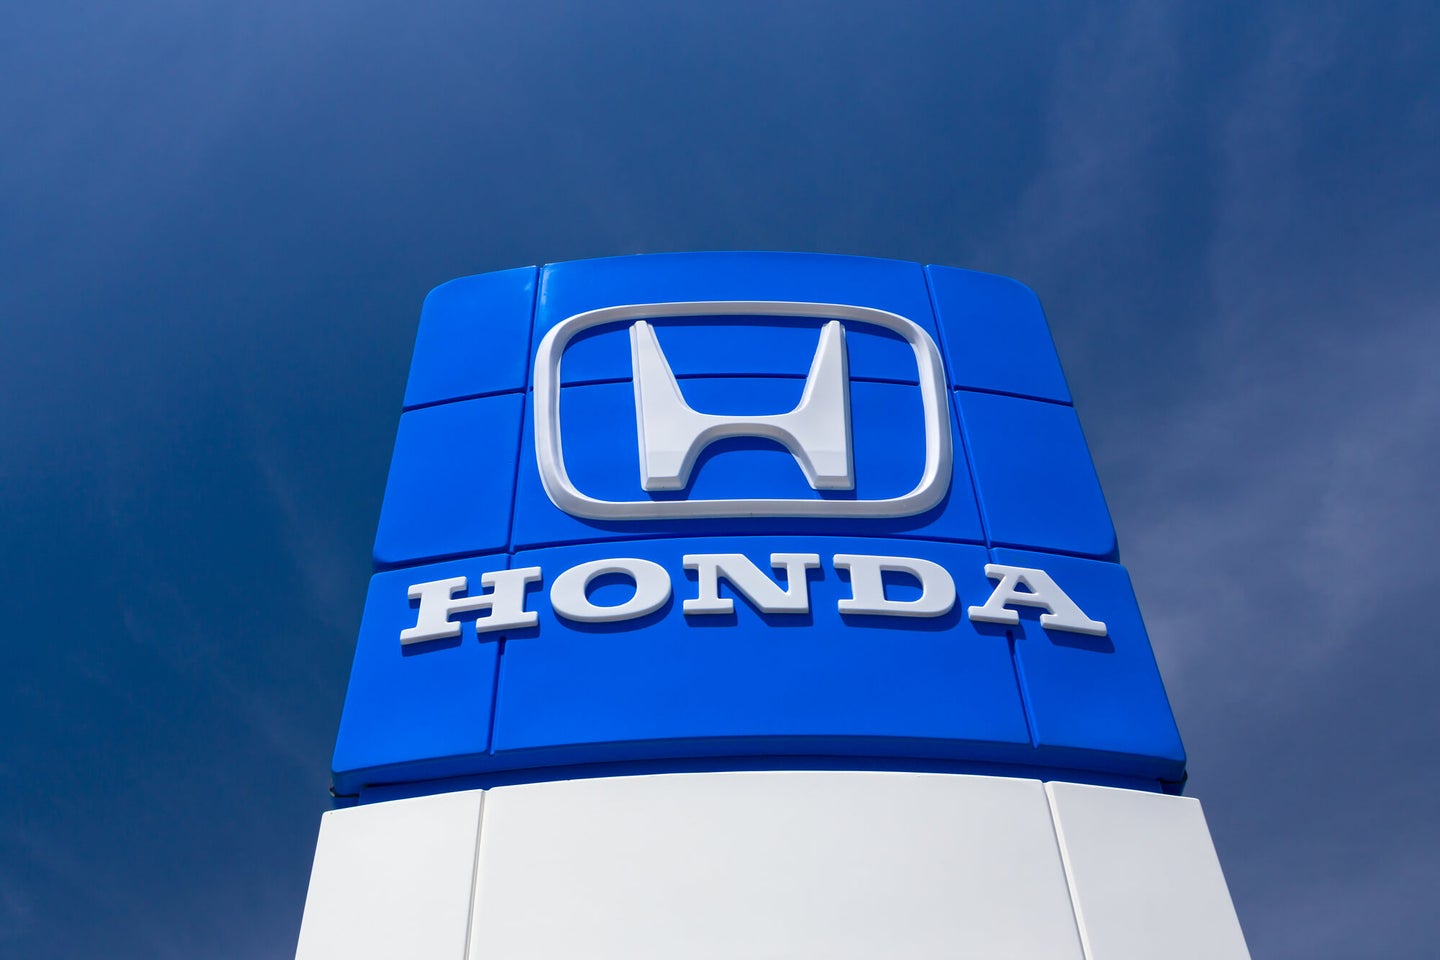 Important Details About the Honda Care Warranty Program